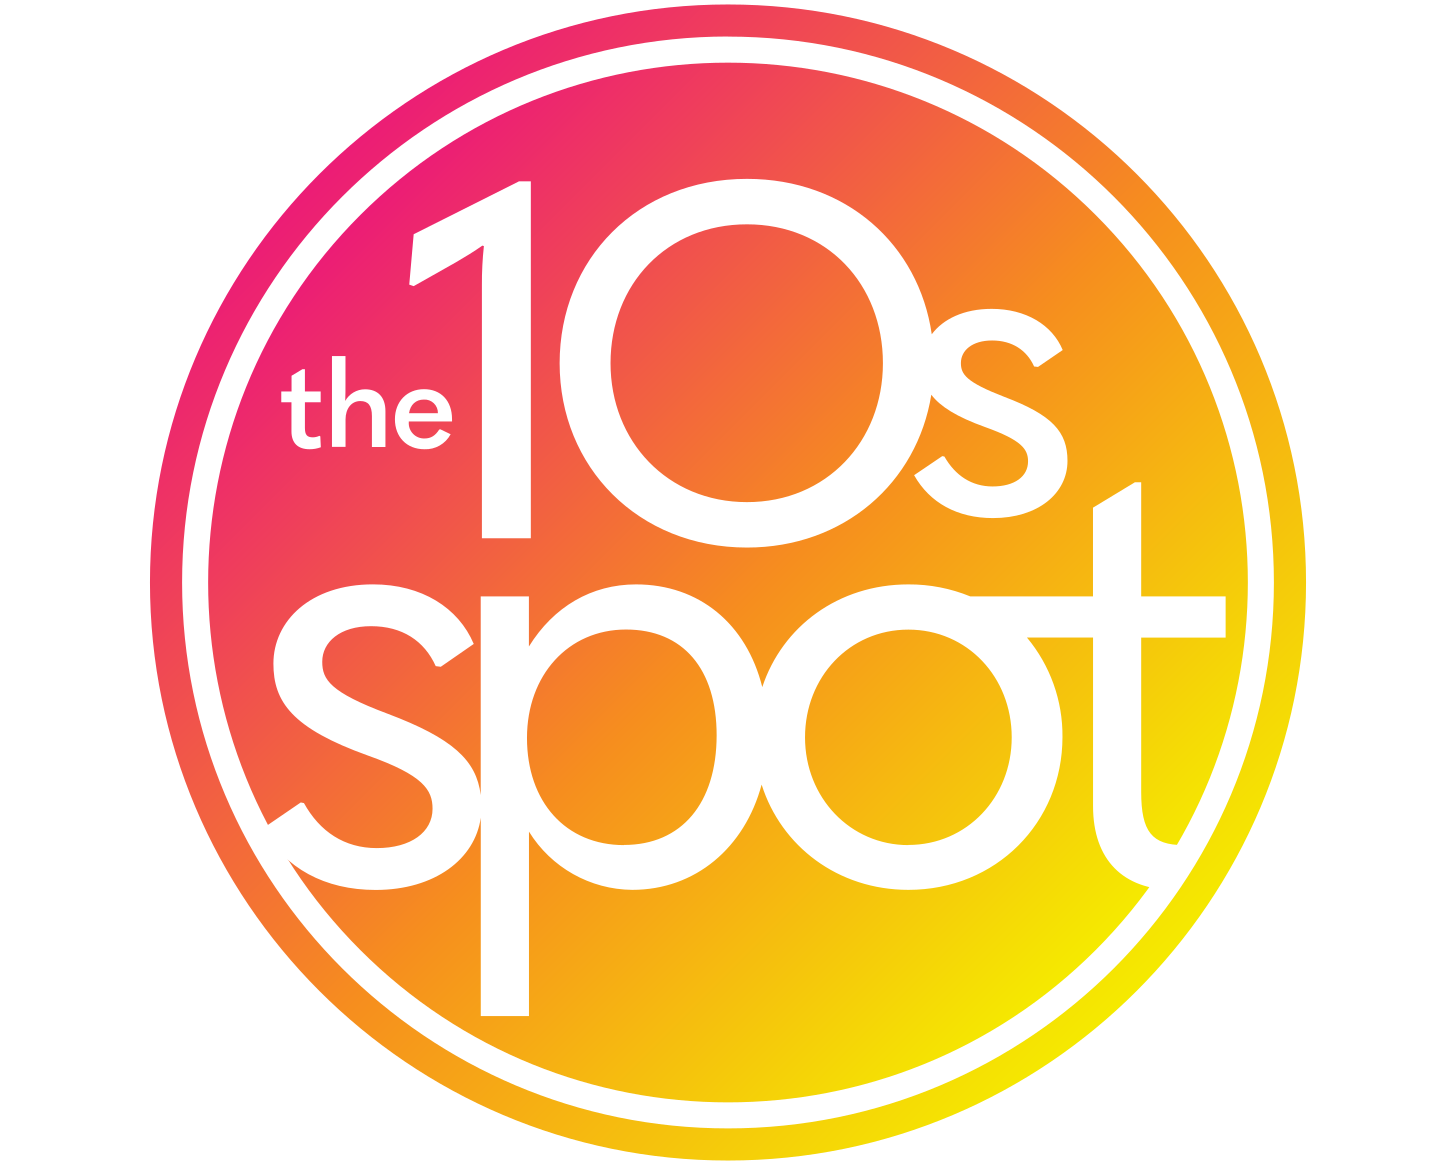 The 10s Spot Channel Logo